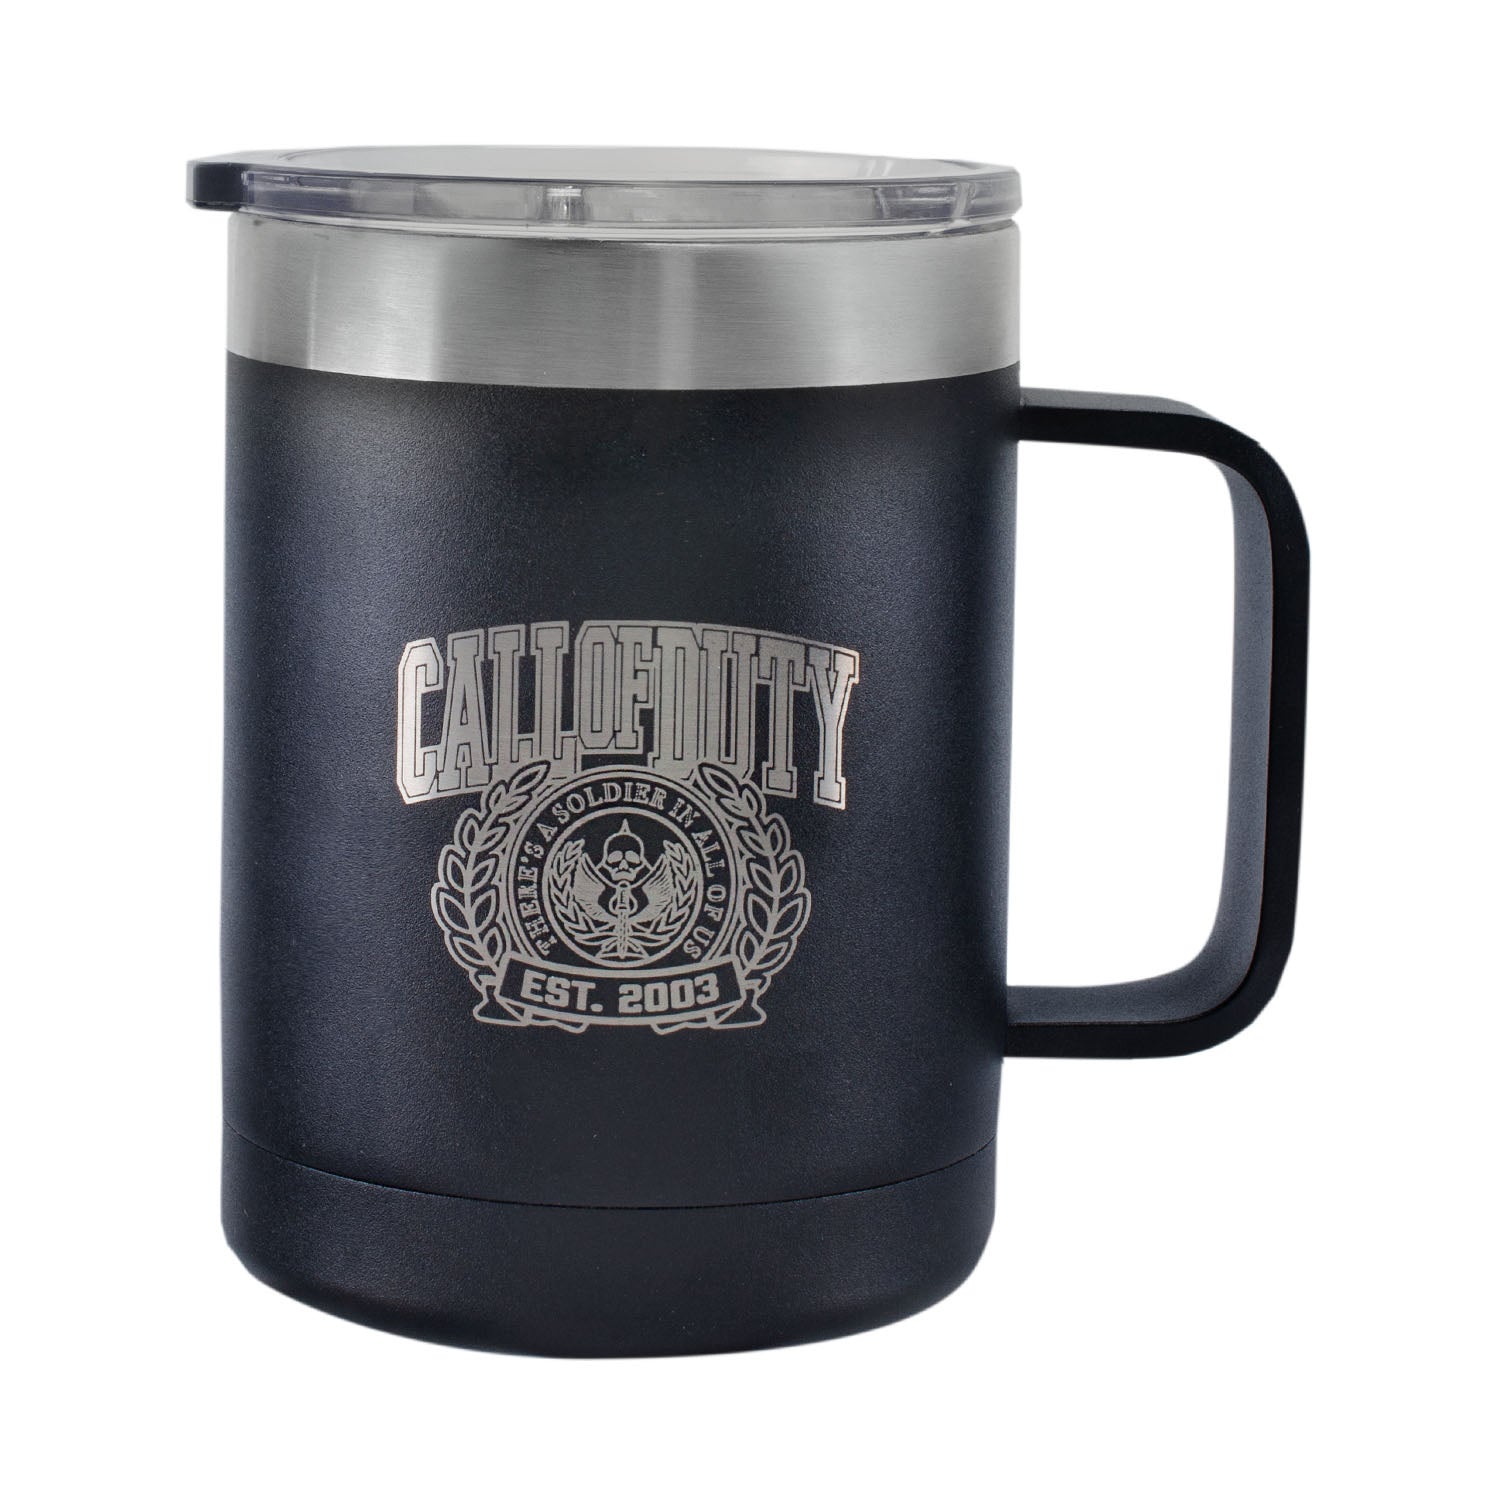 Call of Duty Alumnus Black Insulated Coffee Mug - Front View